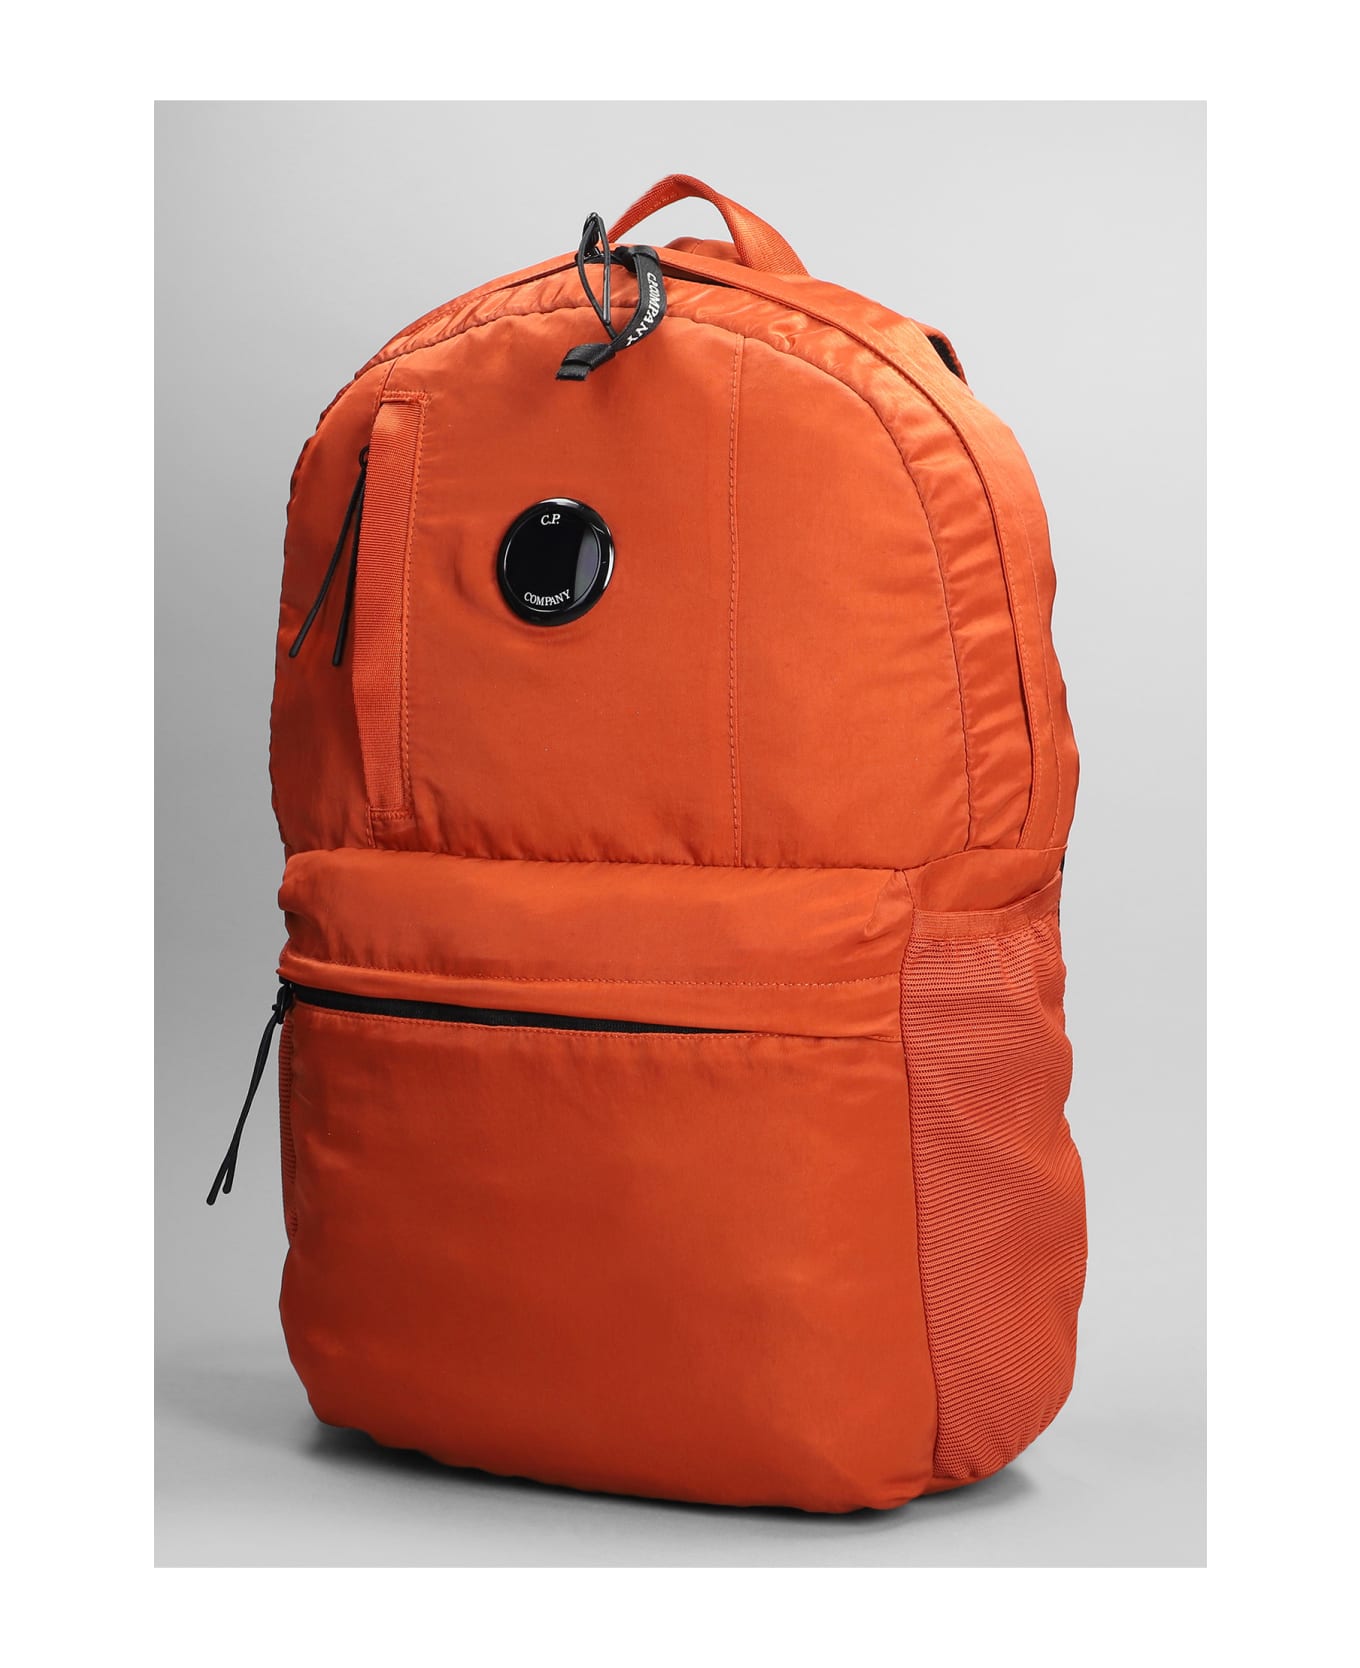 C.P. Company Nylon B Backpack In Orange Polyester - orange バックパック